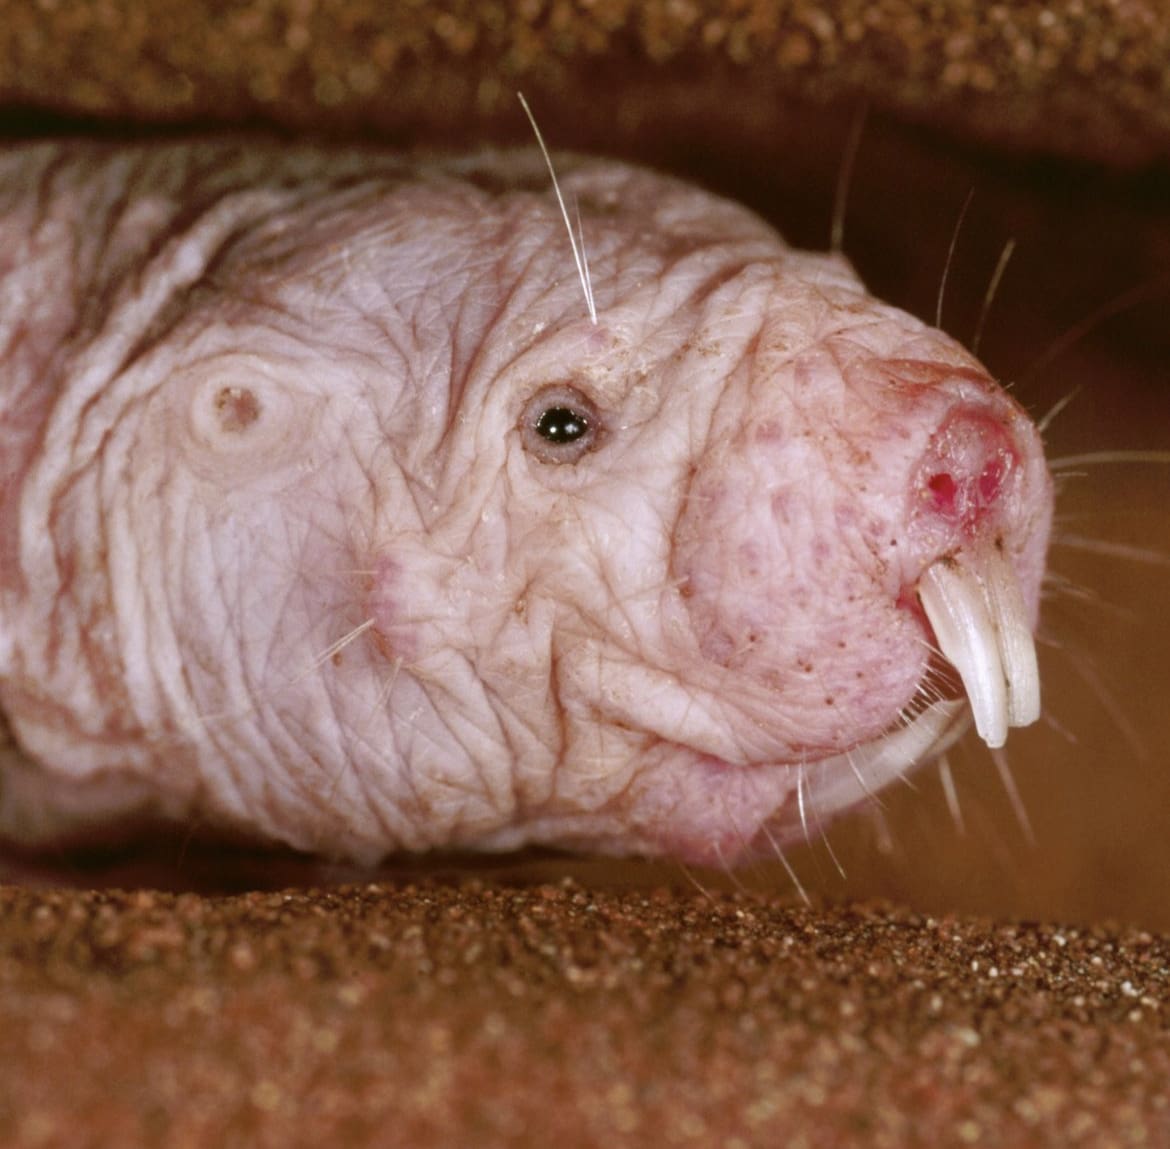 Naked Mole-Rat: The Underground Superhero